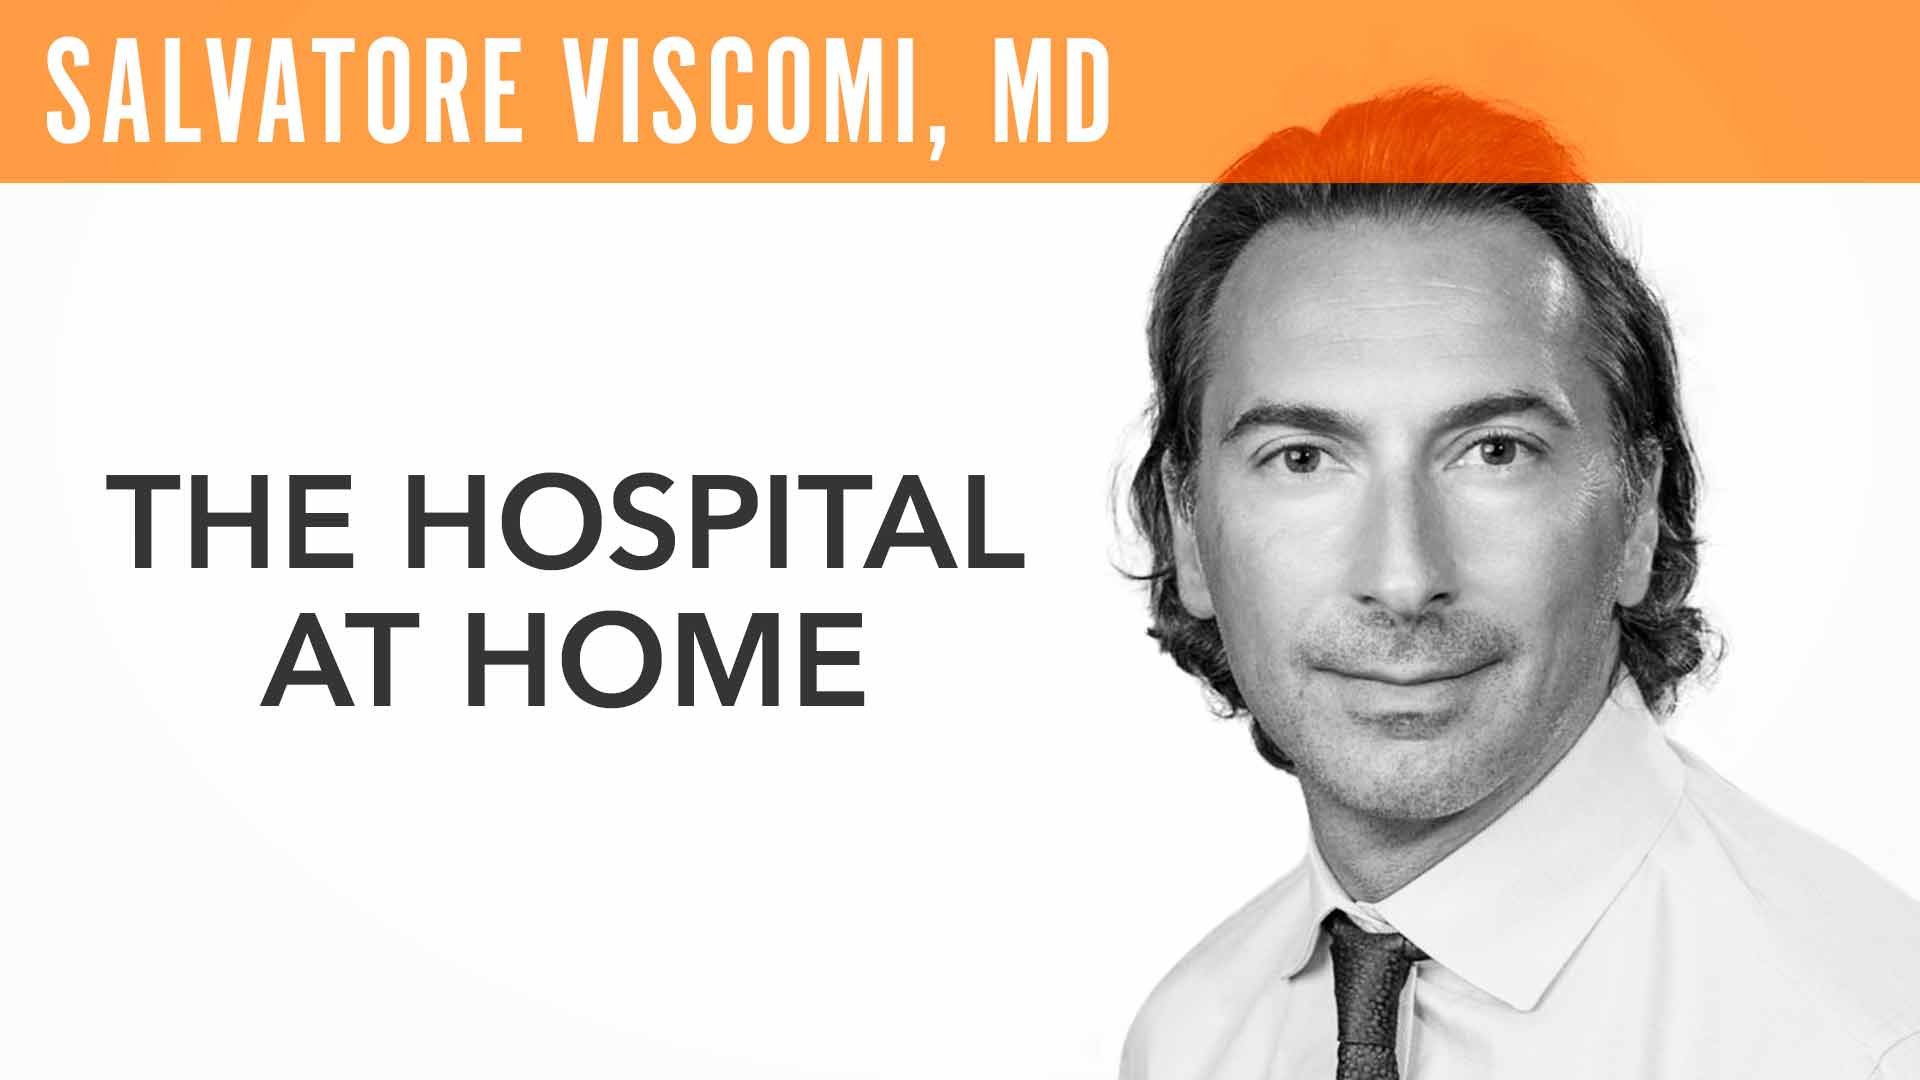 Salvatore Viscomi, "The Hospital at Home"